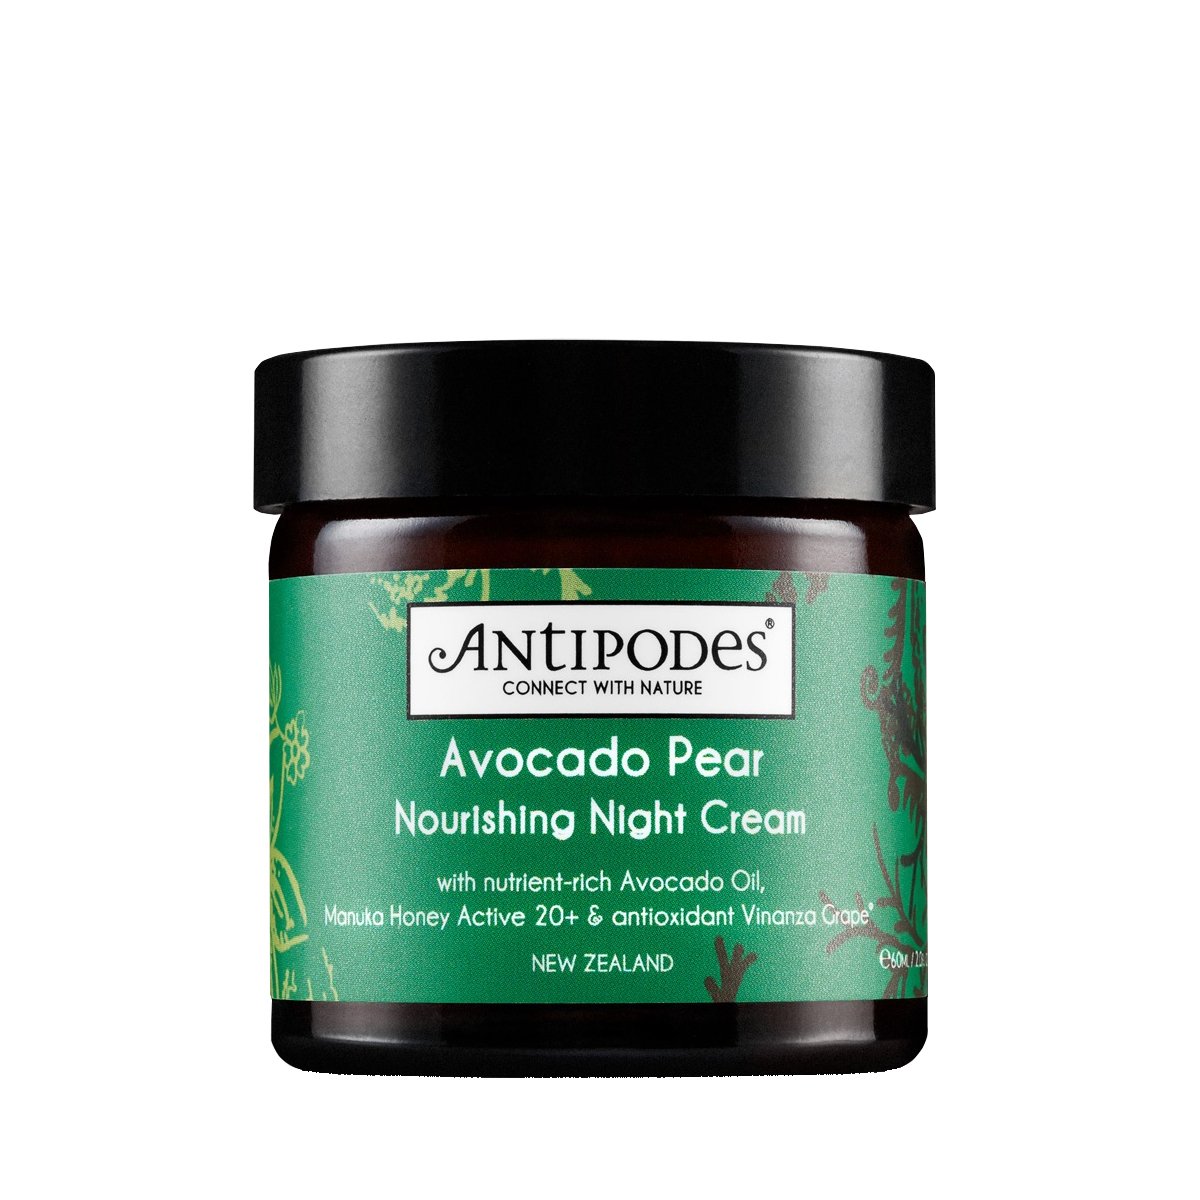 Antipodes Avocado Pear Nourishing Night Cream 60ml/2fl oz